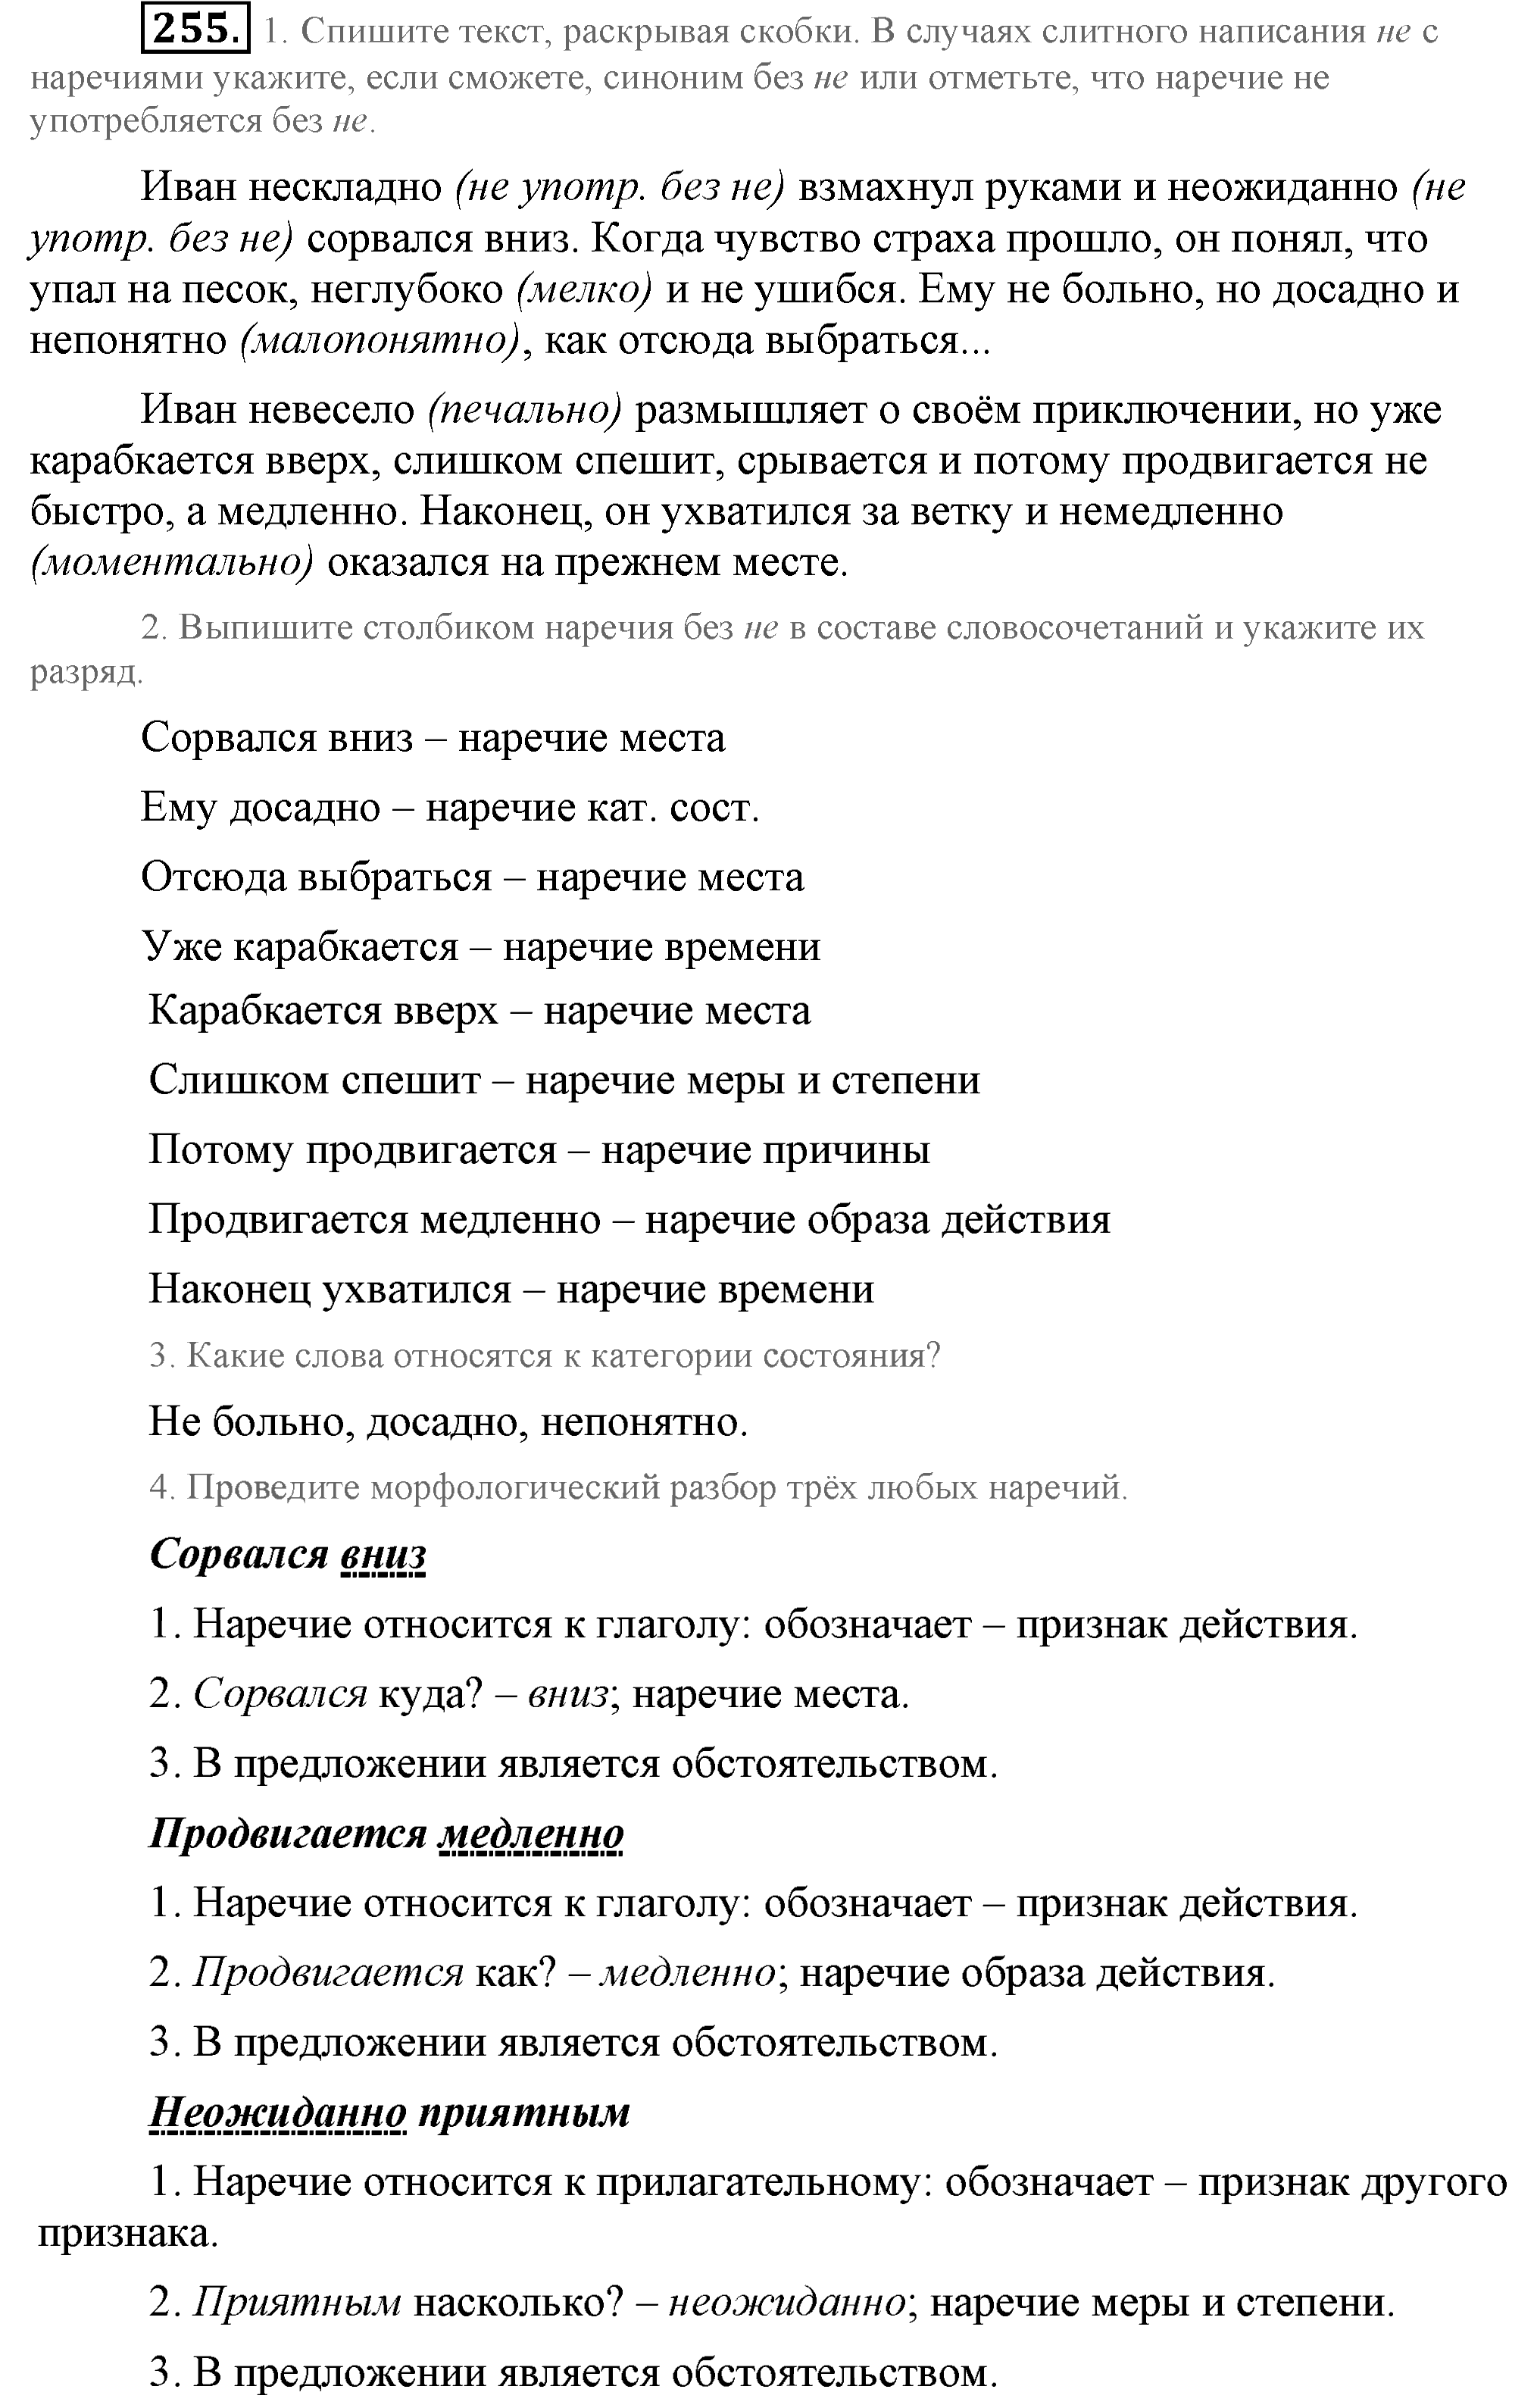 Практика, 7 класс, М.М. Разумовская, 2009, задача: 255